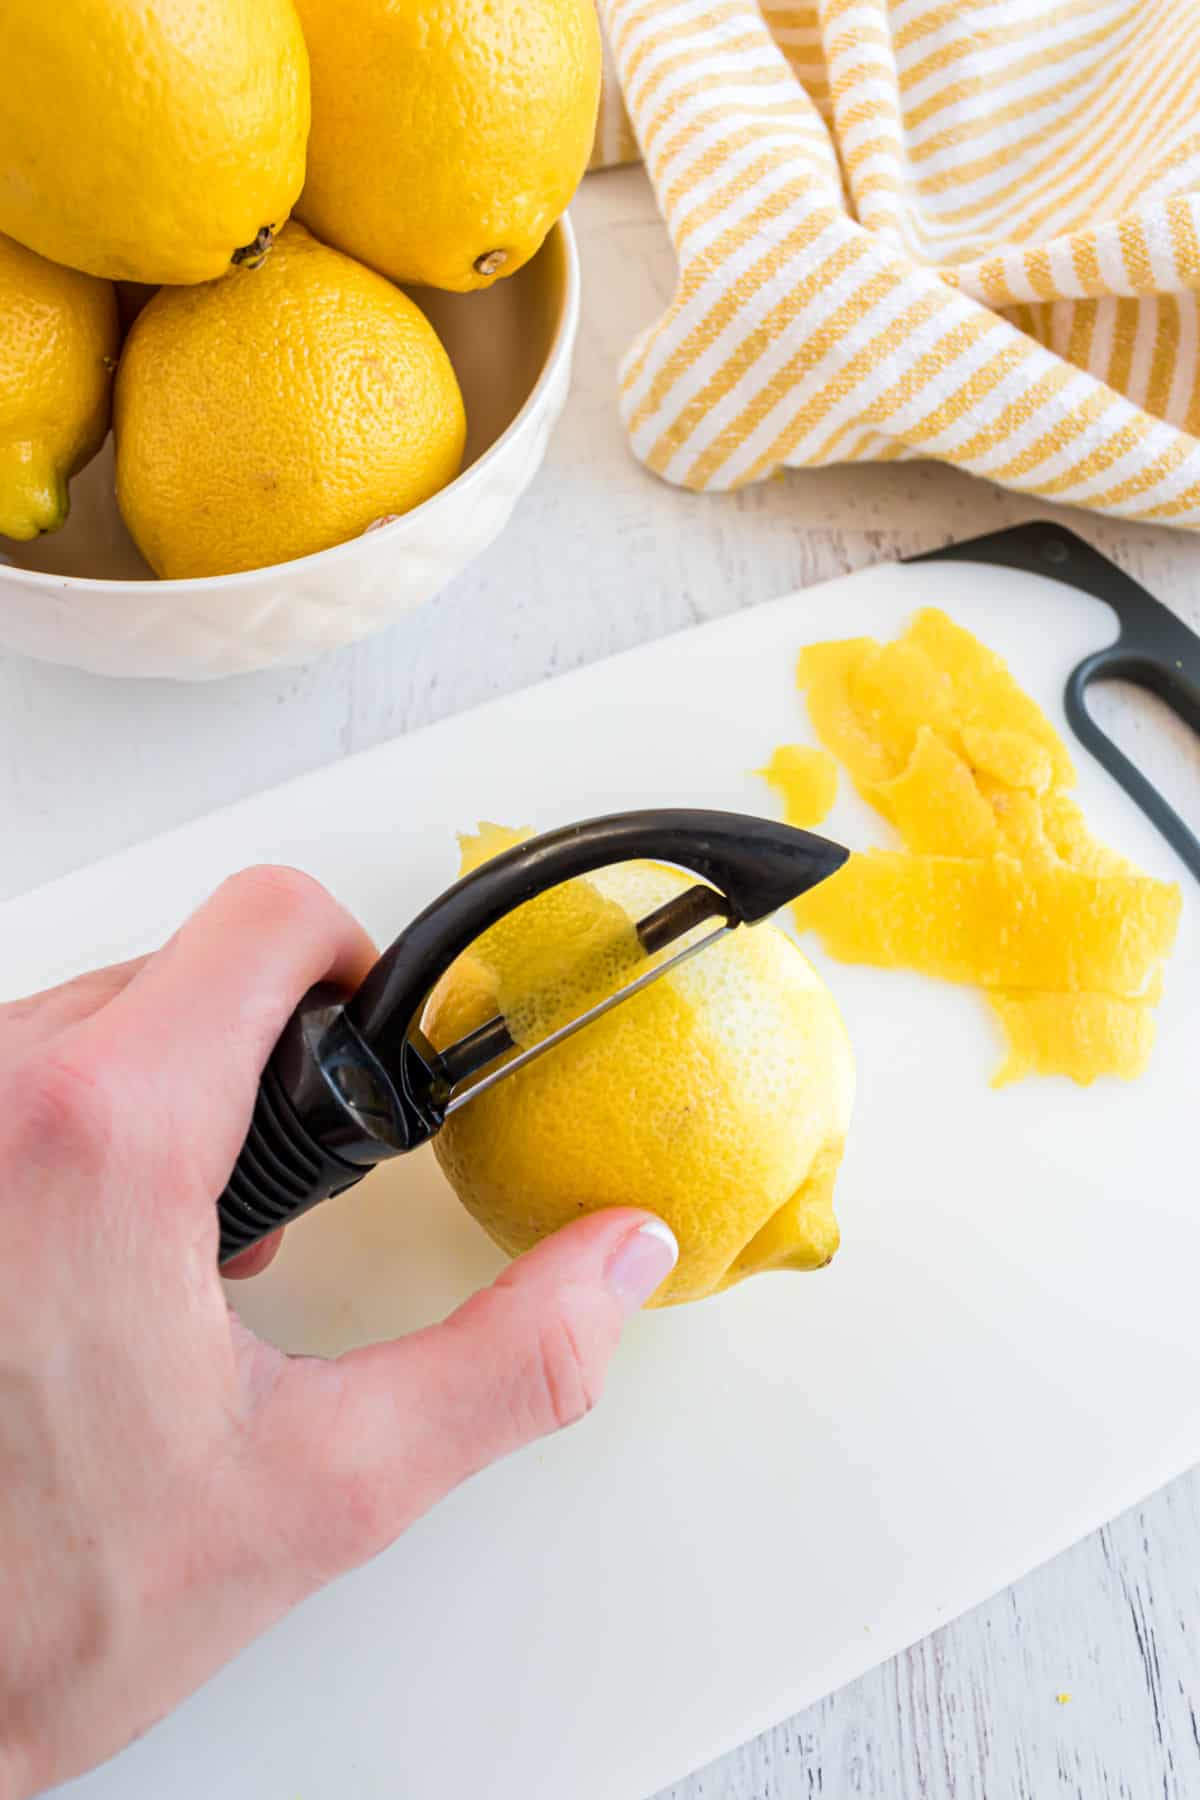 Lemon zested with a lemon peeler.